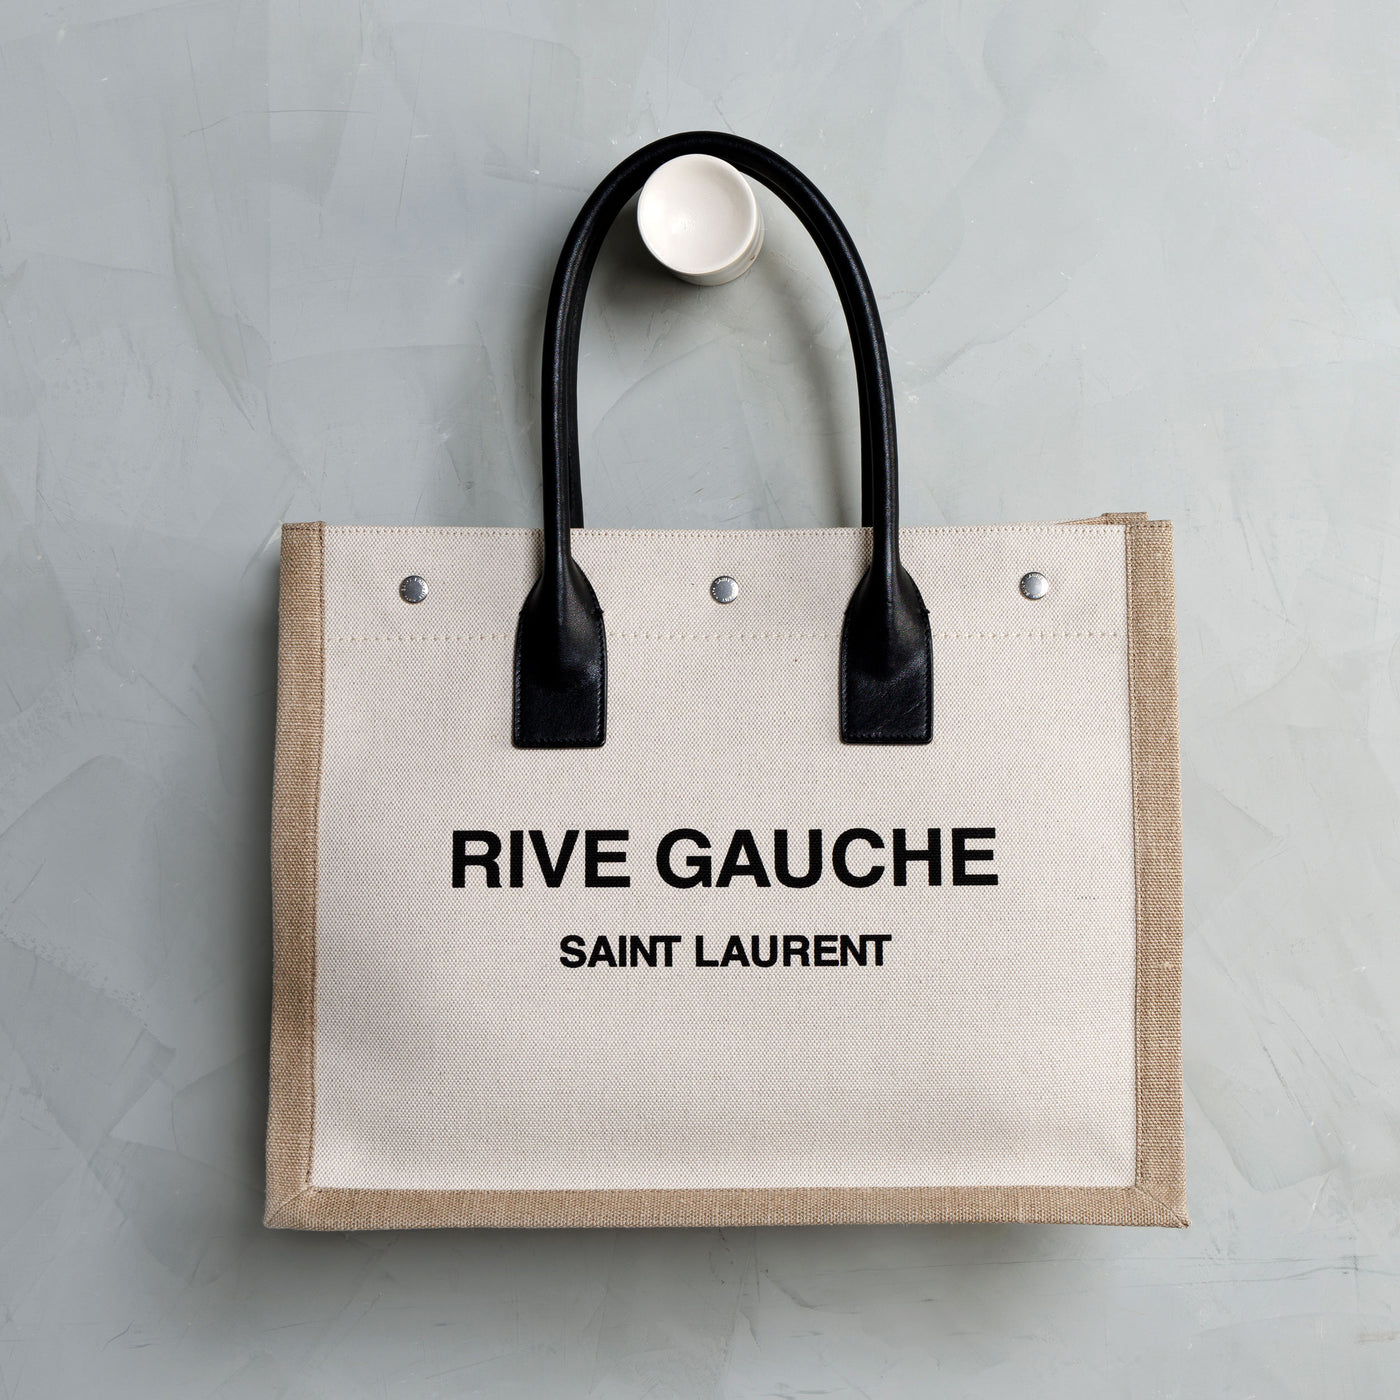 Saint Laurent Rive Gauche Small Tote Bag in Linen Leather Beige